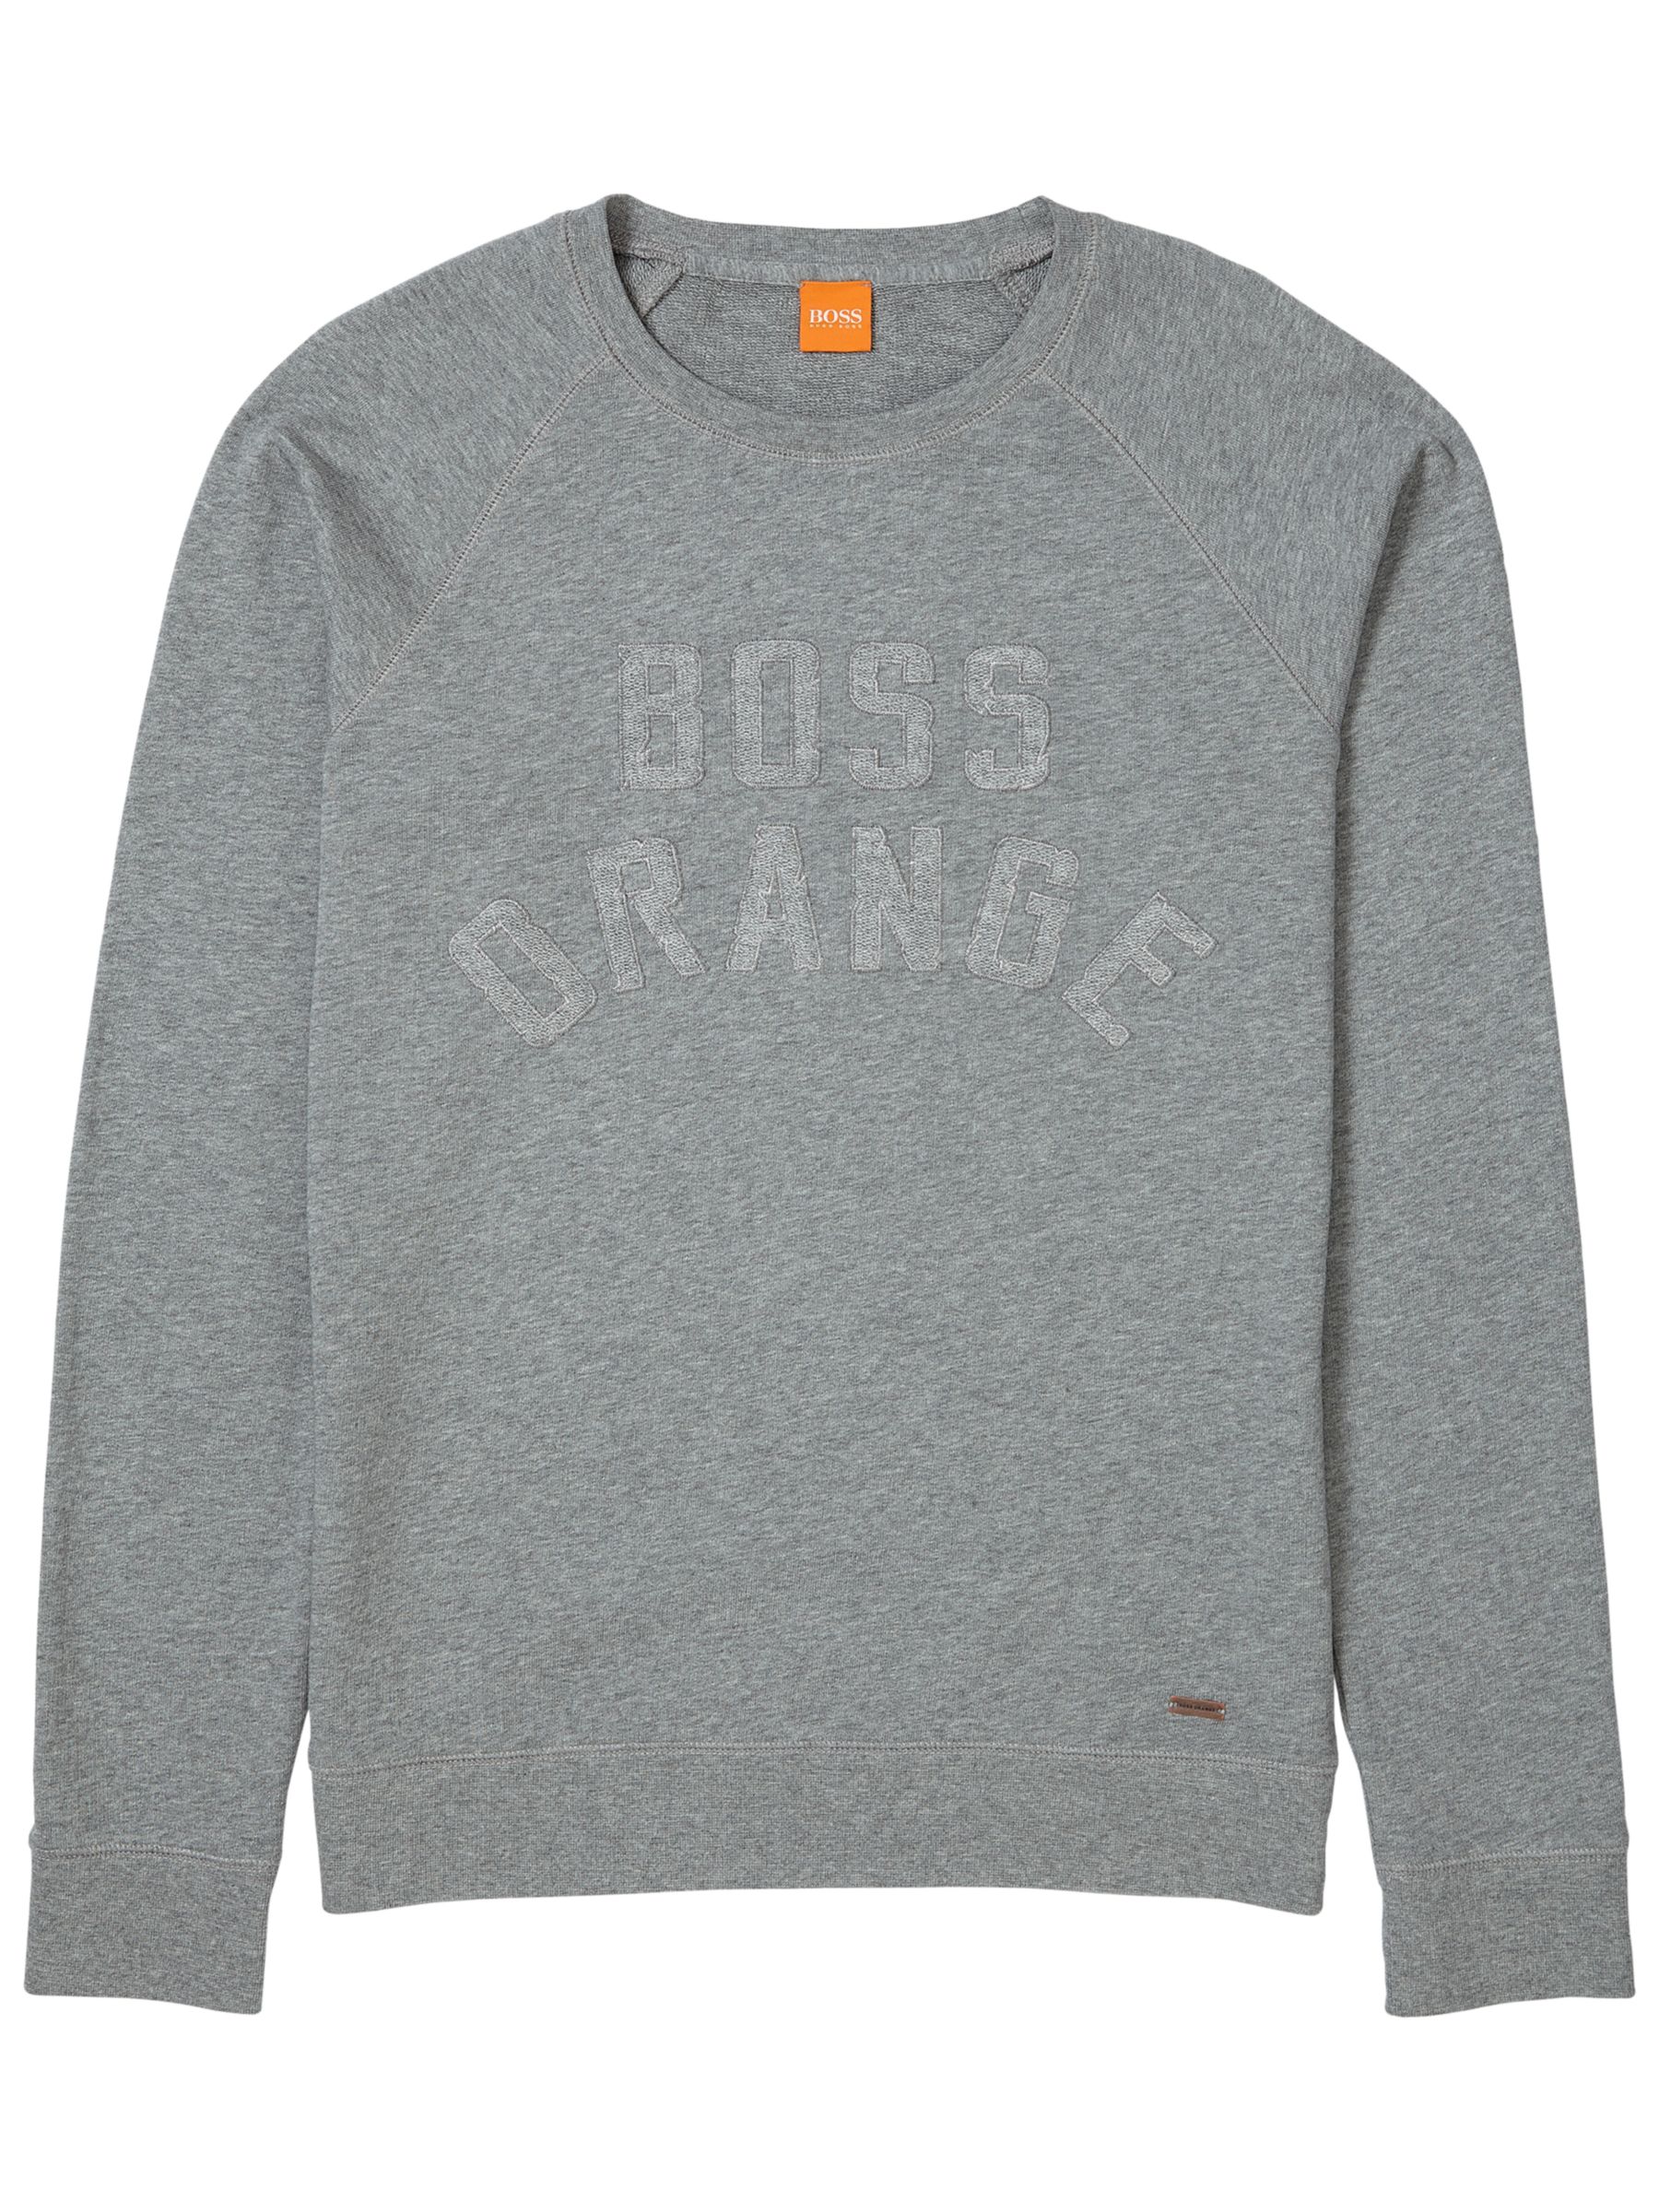 boss orange sweatshirt Cheaper Than 